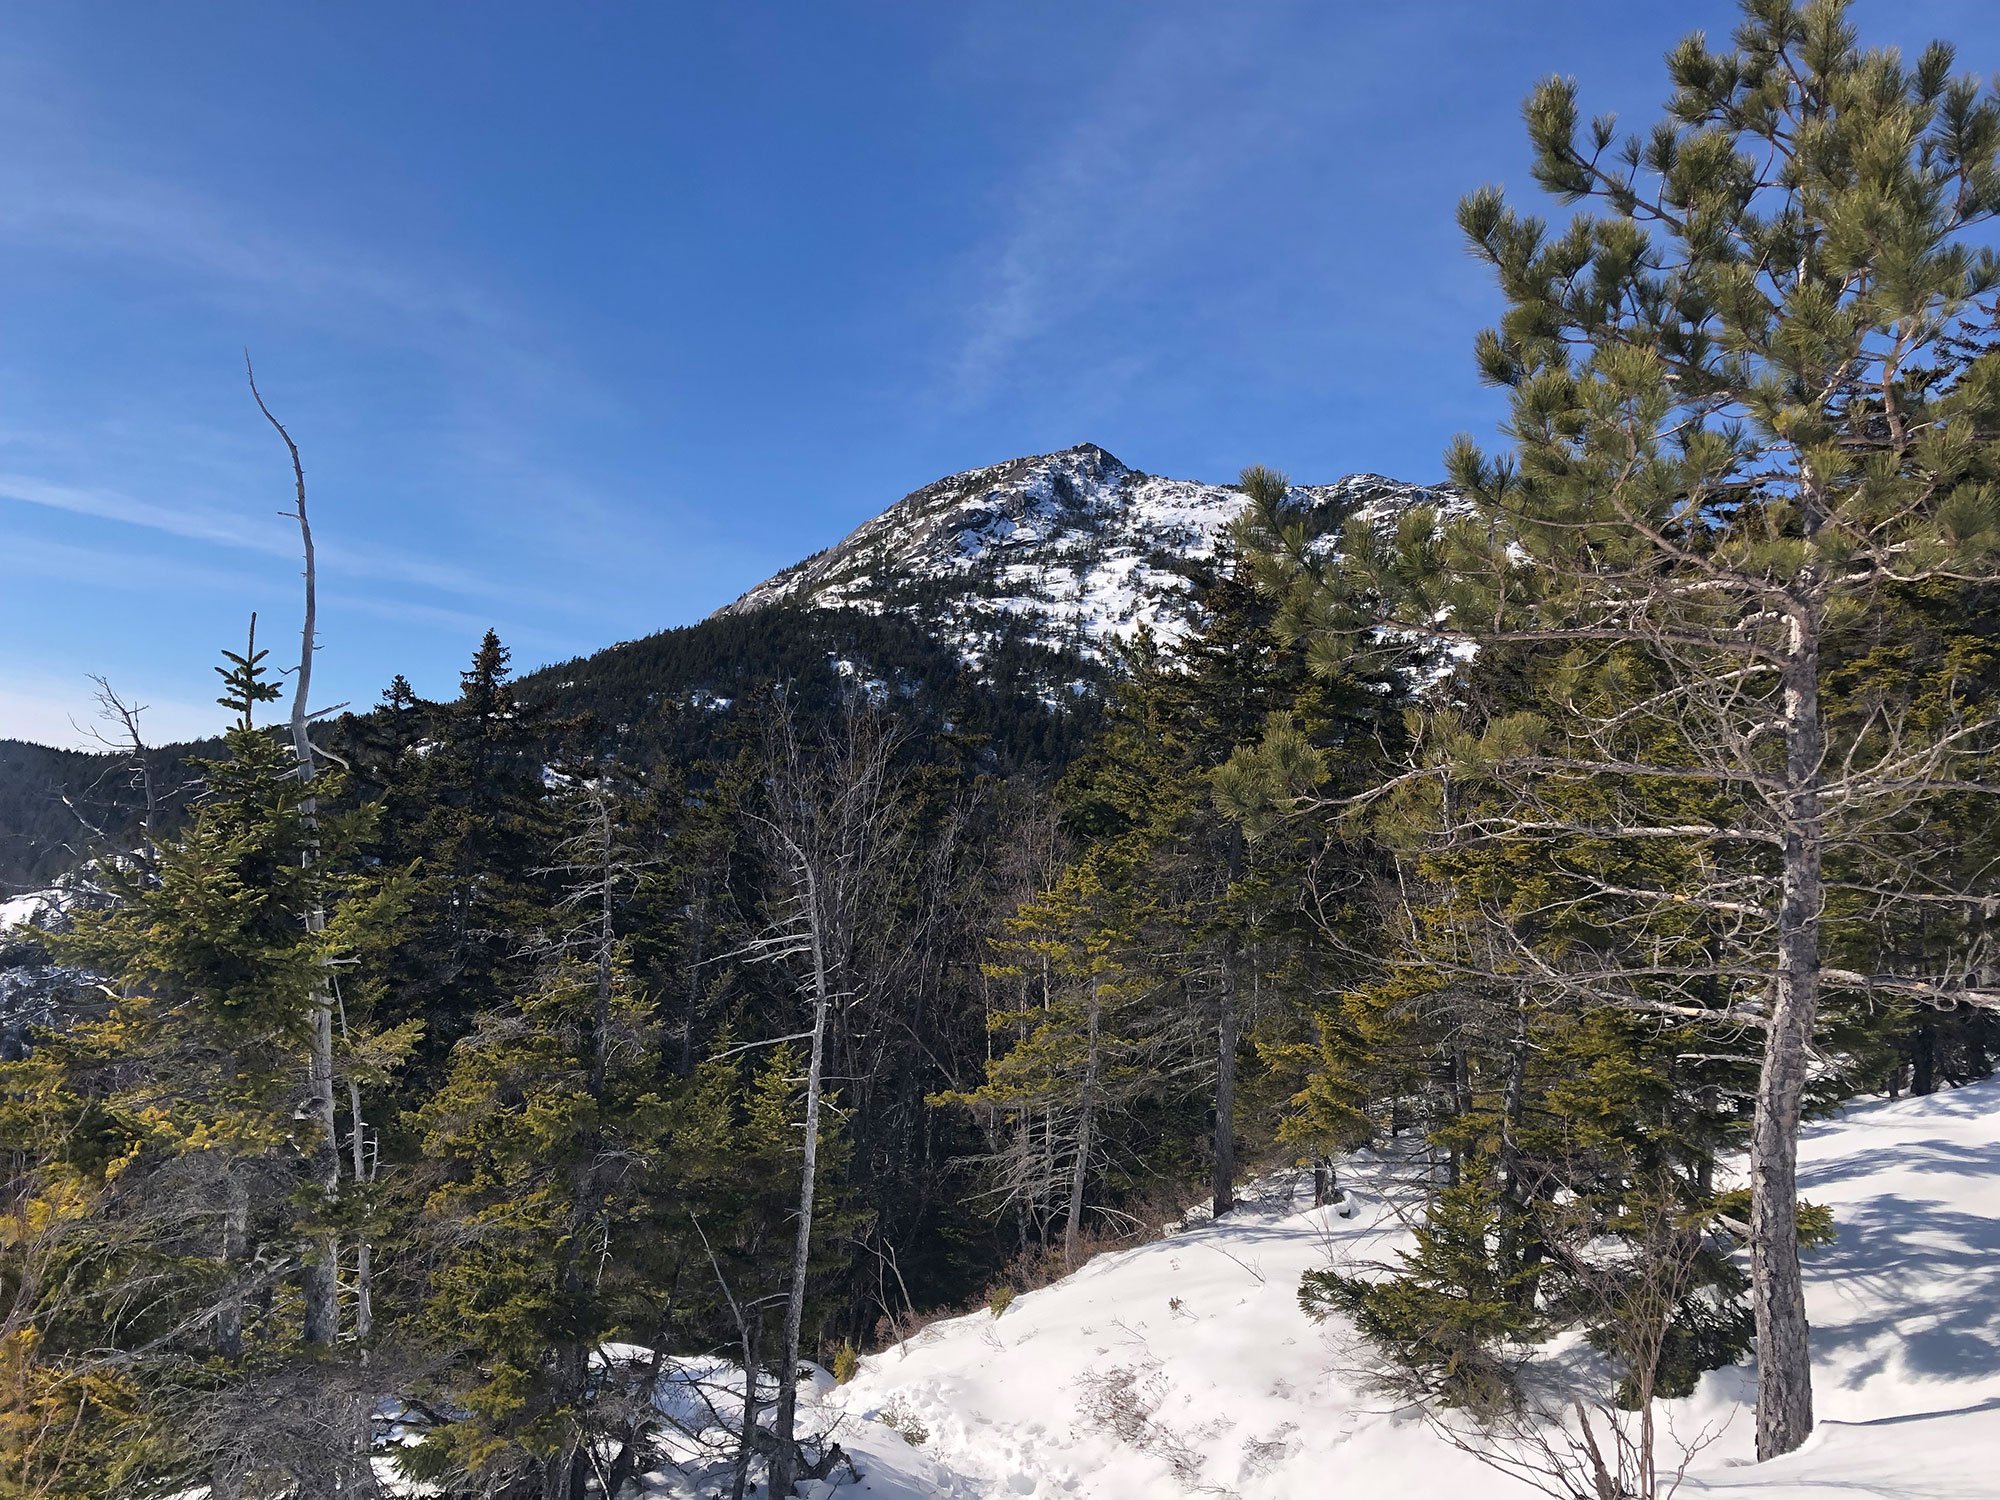 Alpha Guide: Hiking Mount Chocorua via the Piper Trail in the Winter